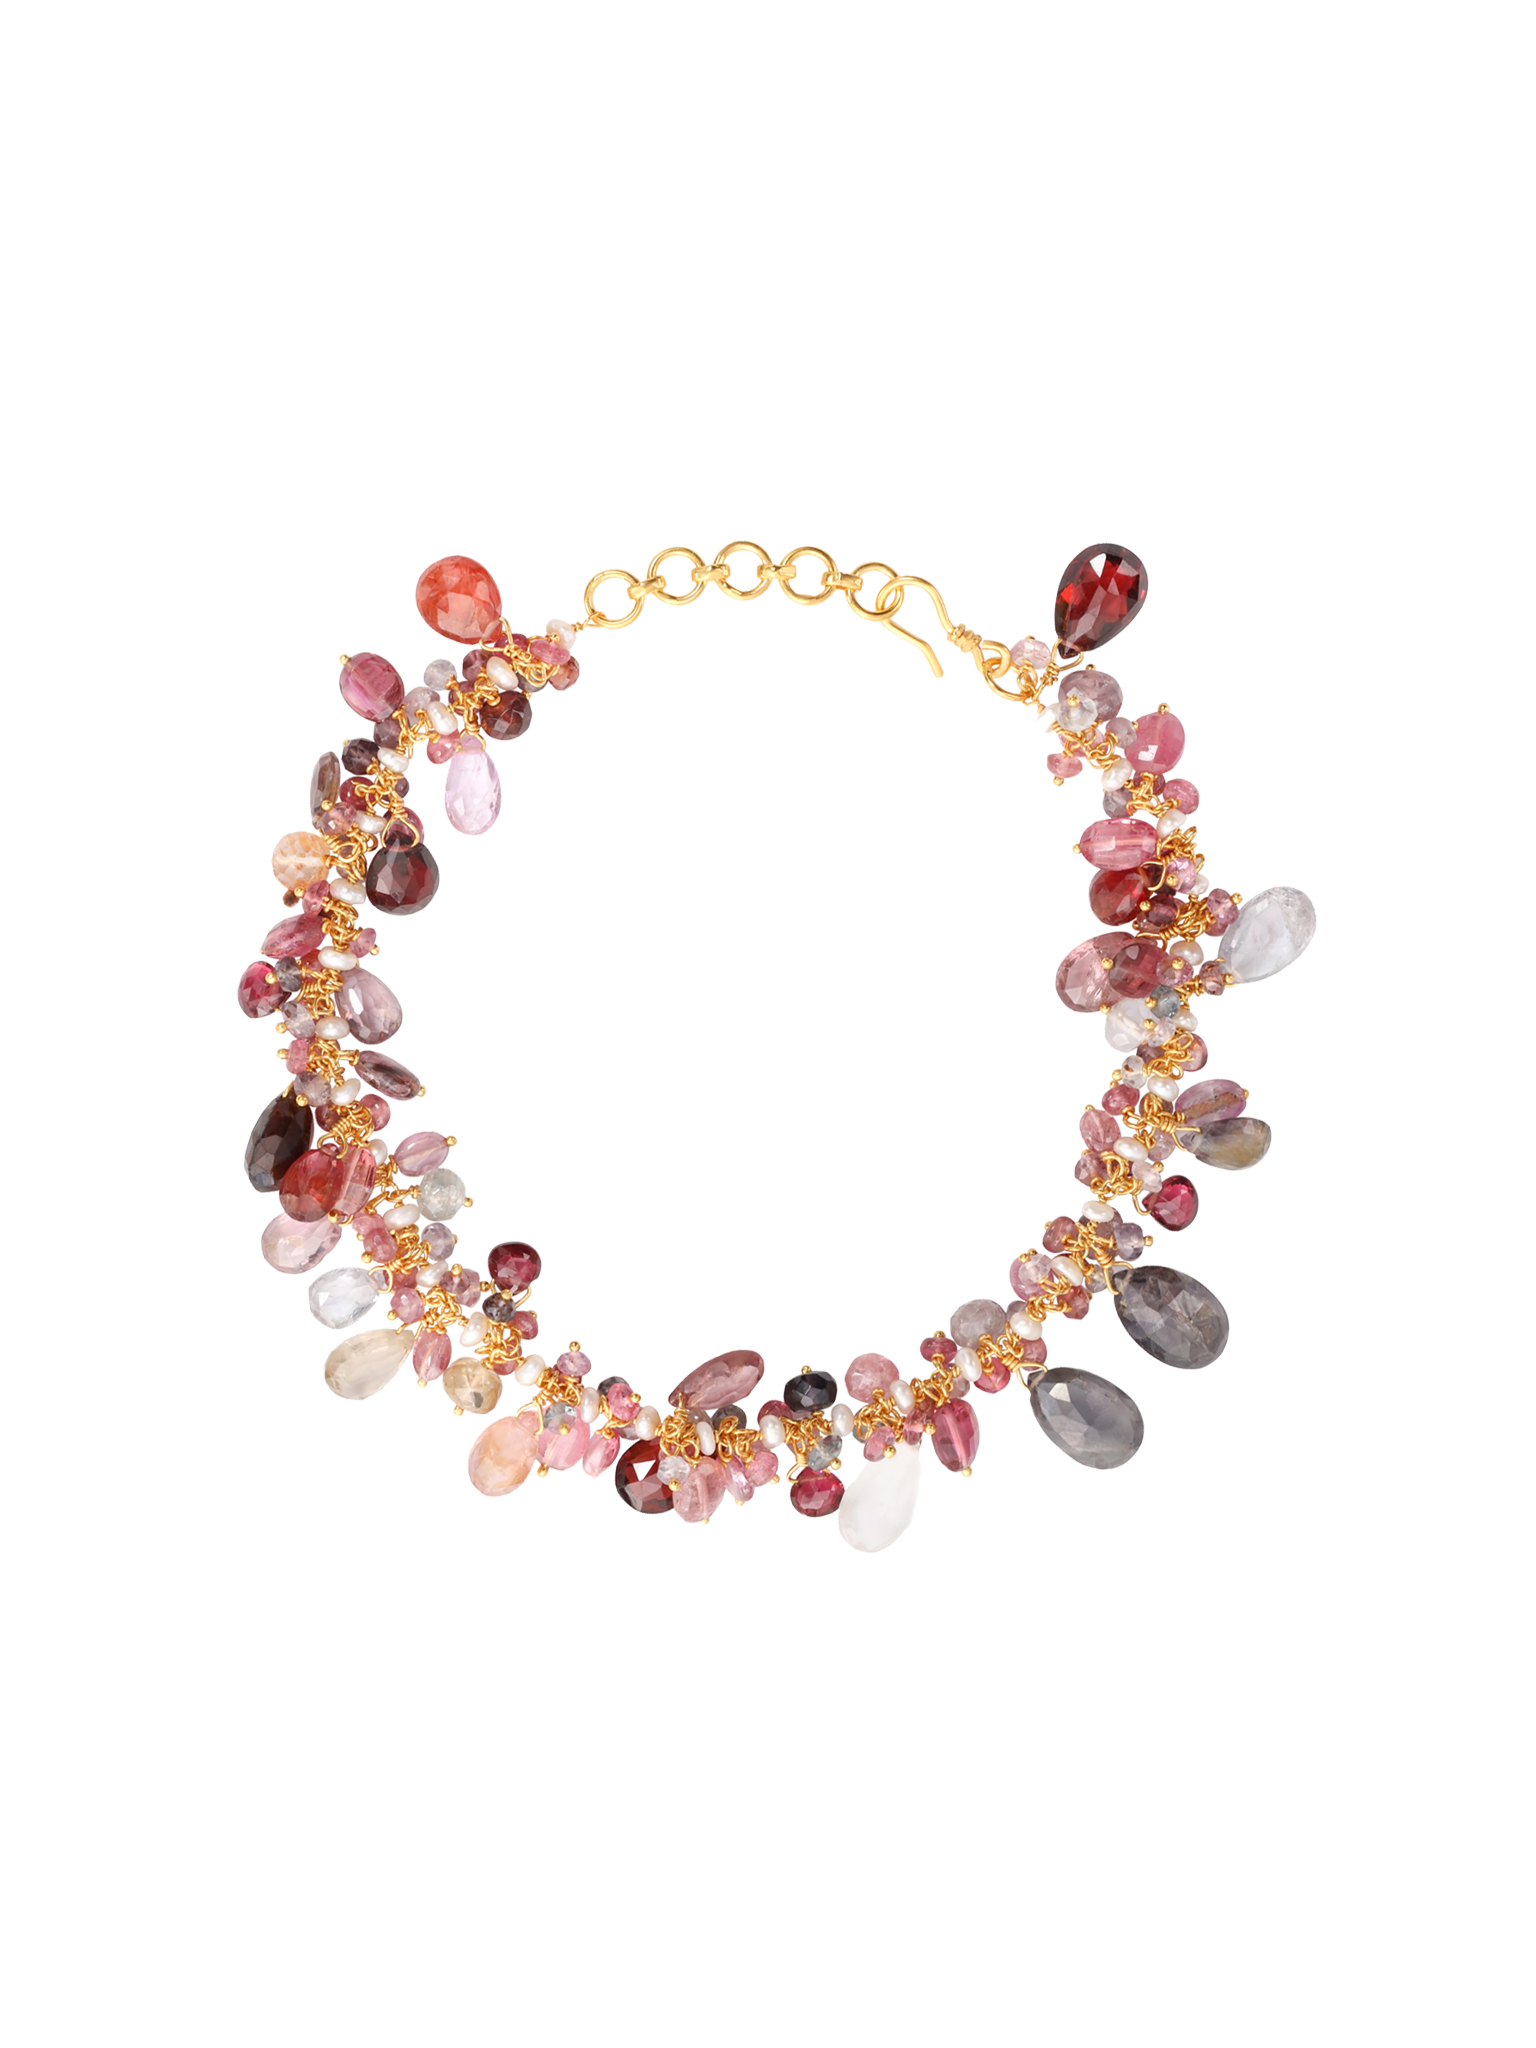 Katherine multicolour sapphire & pearl bracelet